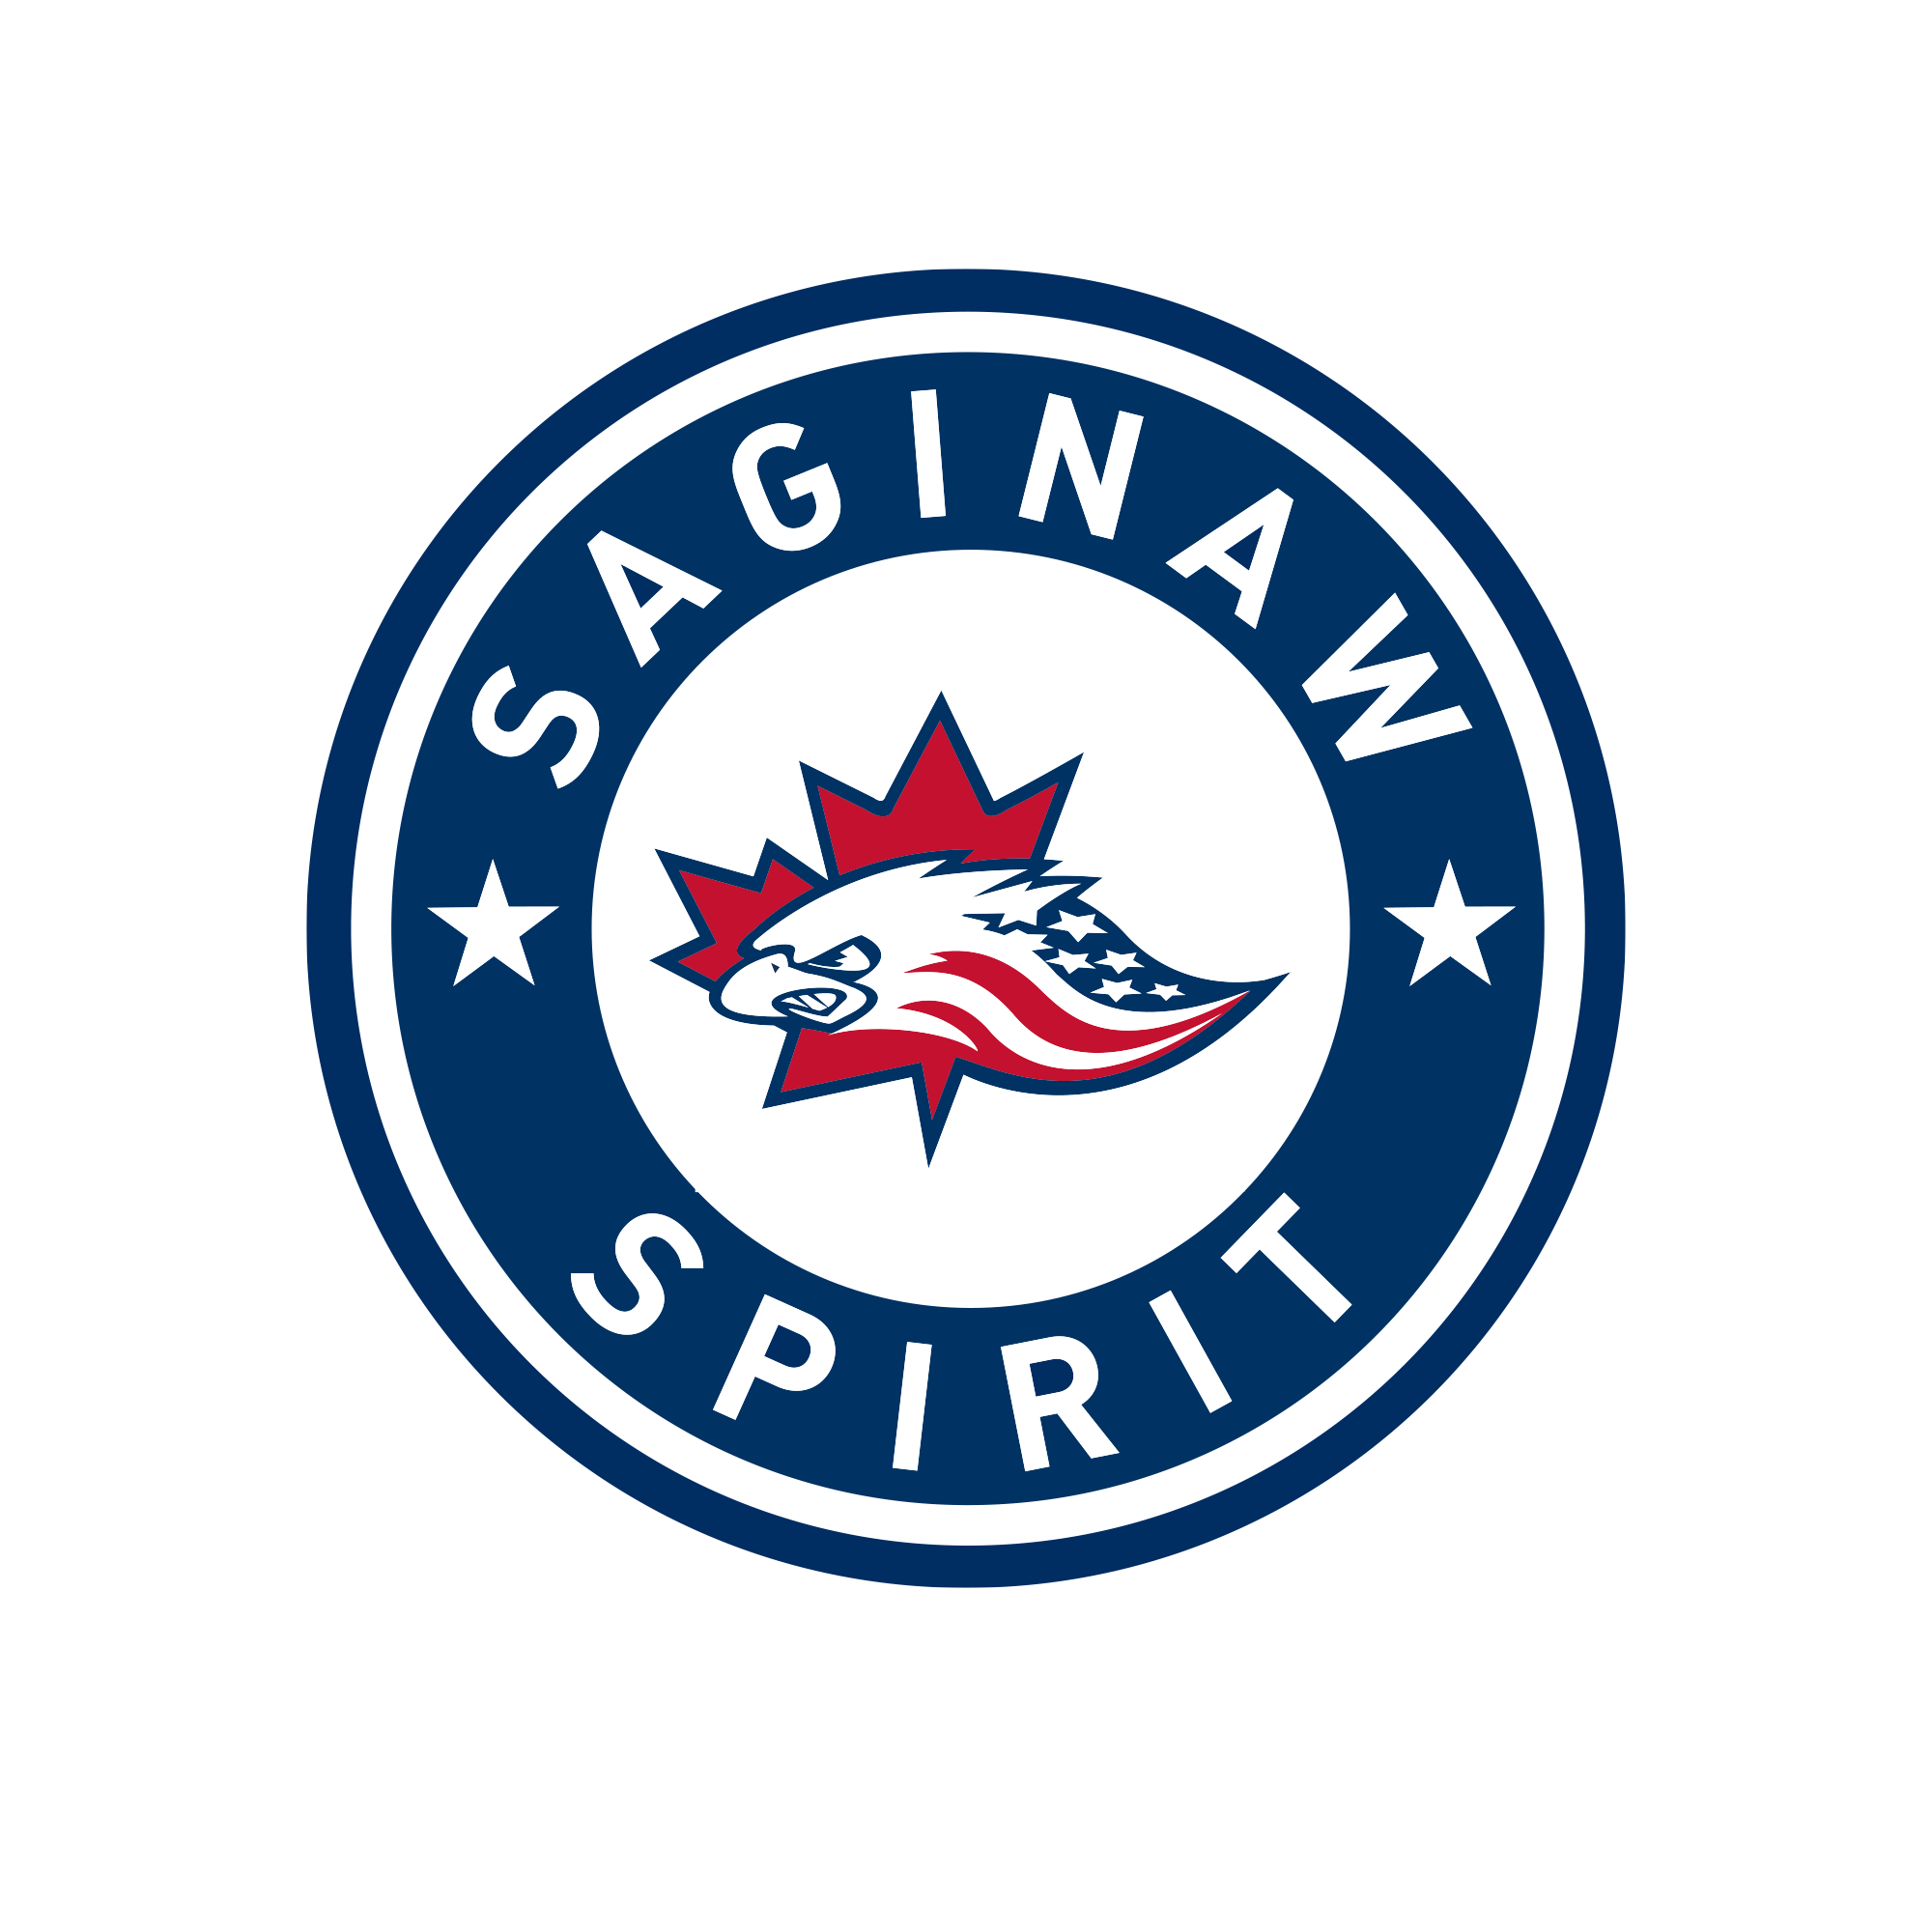 Saginaw Spirit of the OHL. Jerseys made by Projoy Sportswear & Apparel.